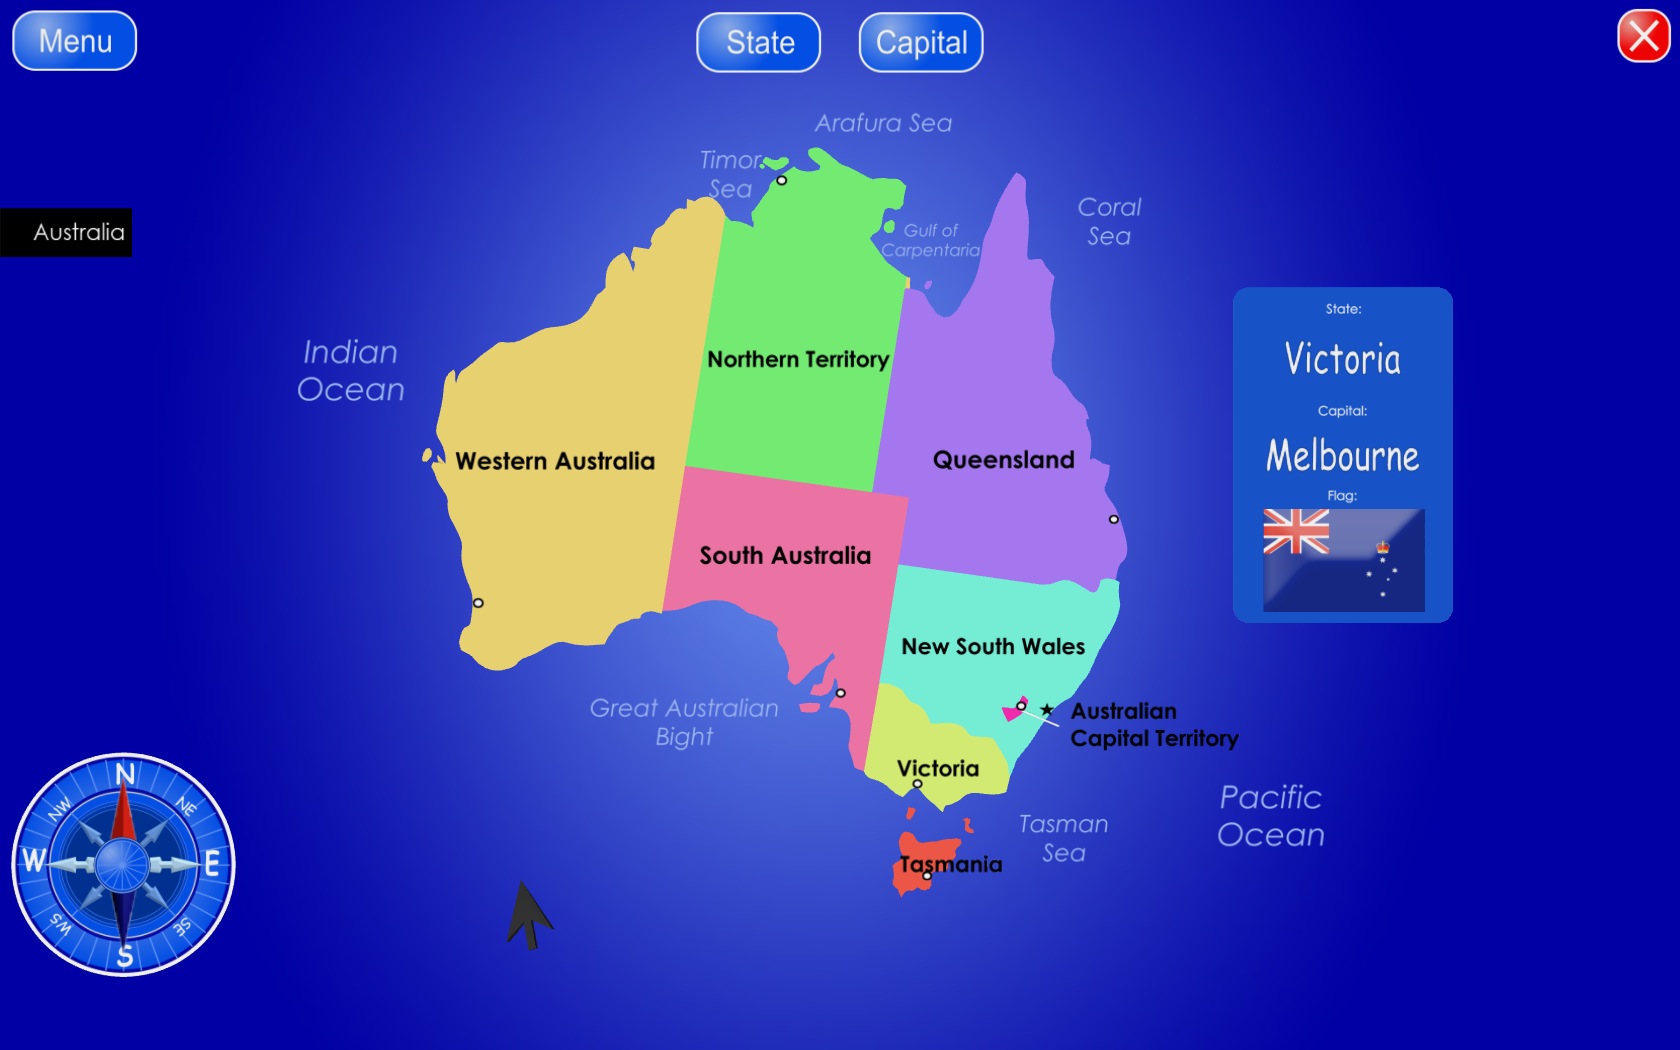 States and Territories of Australia 1.0 : Main window